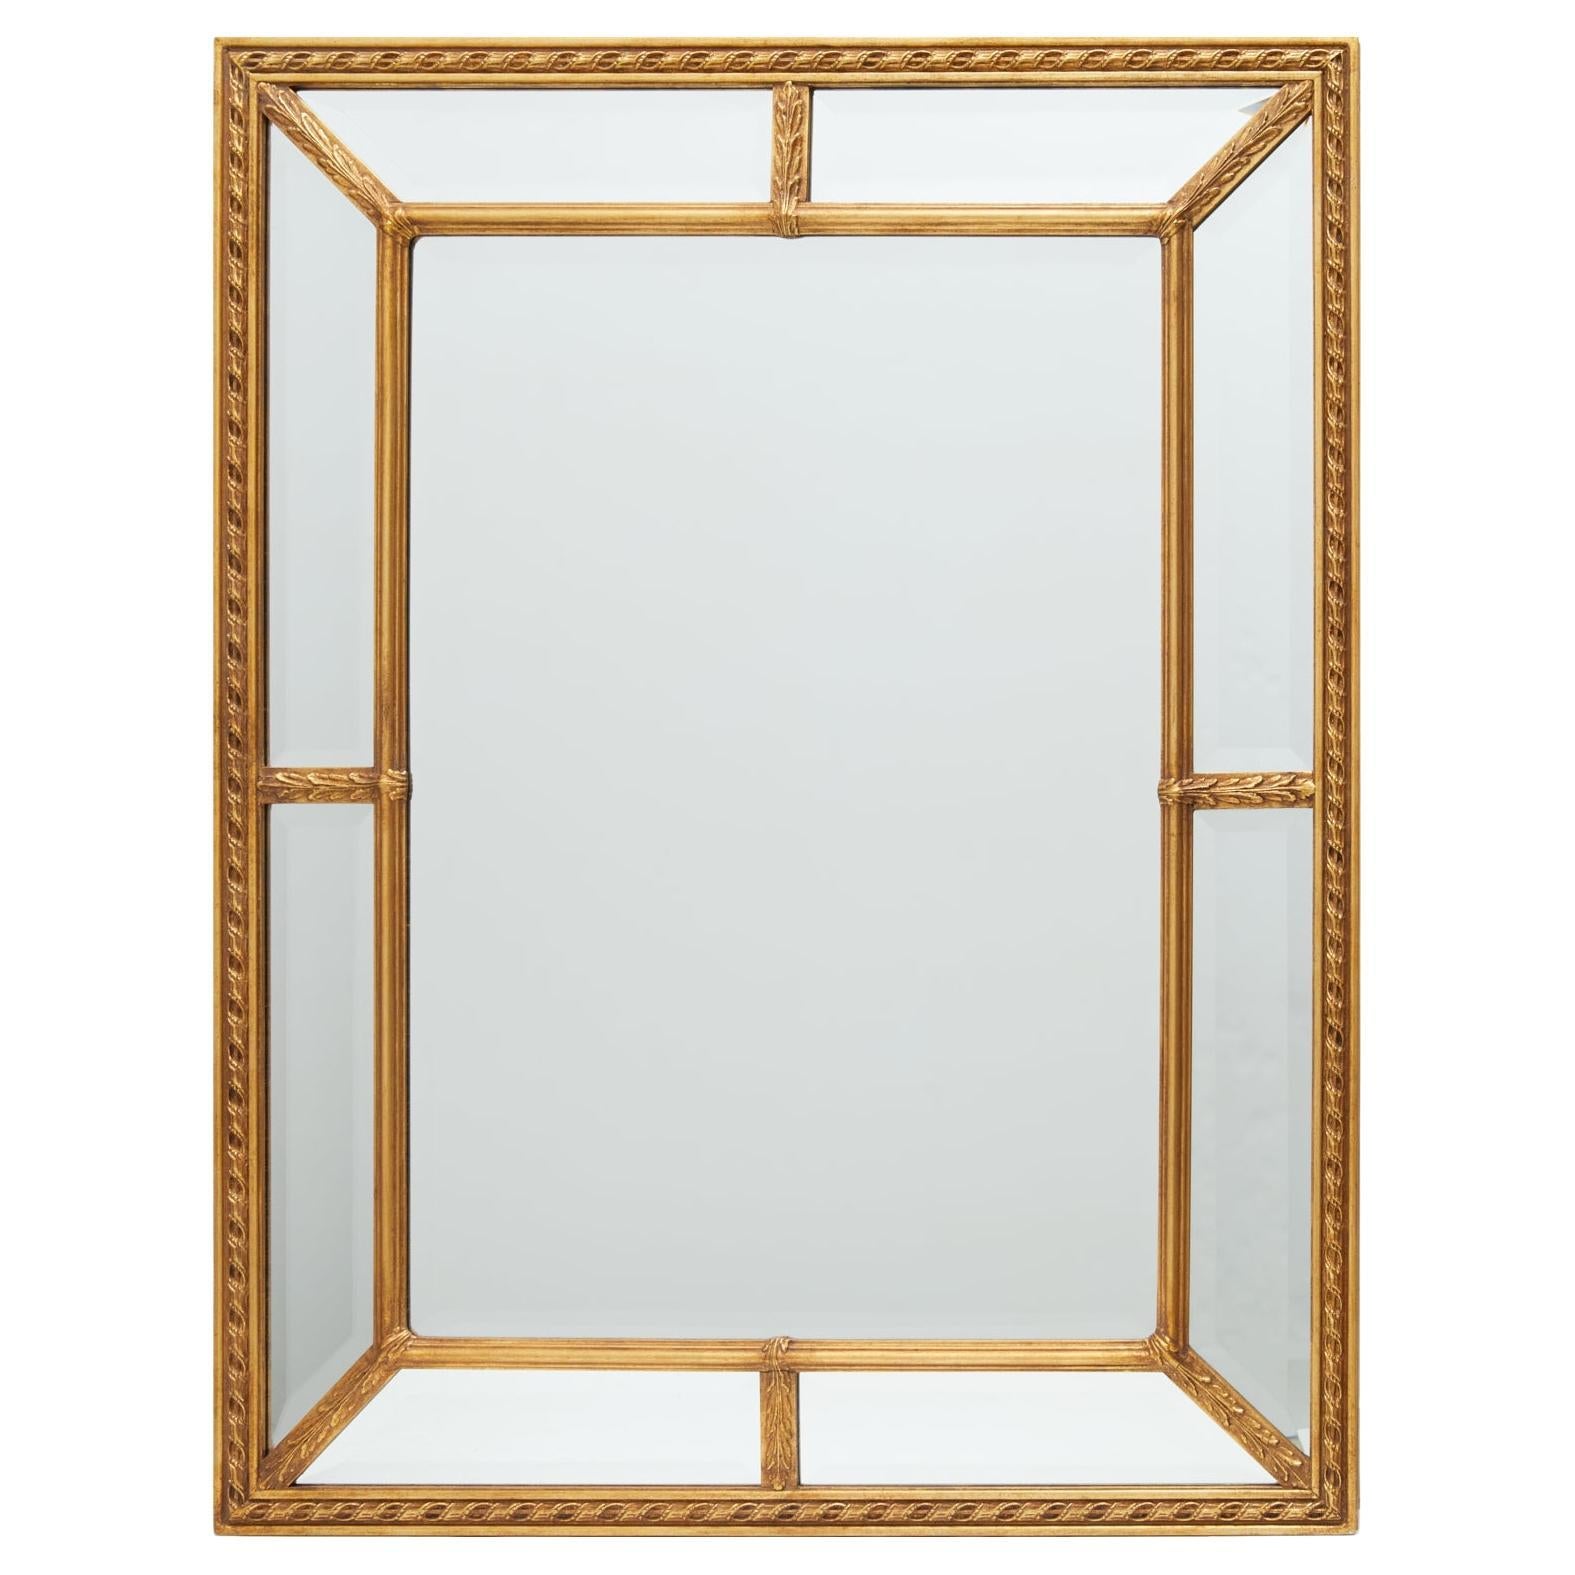 20th C. Carvers' Guild Regency Double Rectangle Mirror #1204 Antiqued Gold Leaf For Sale